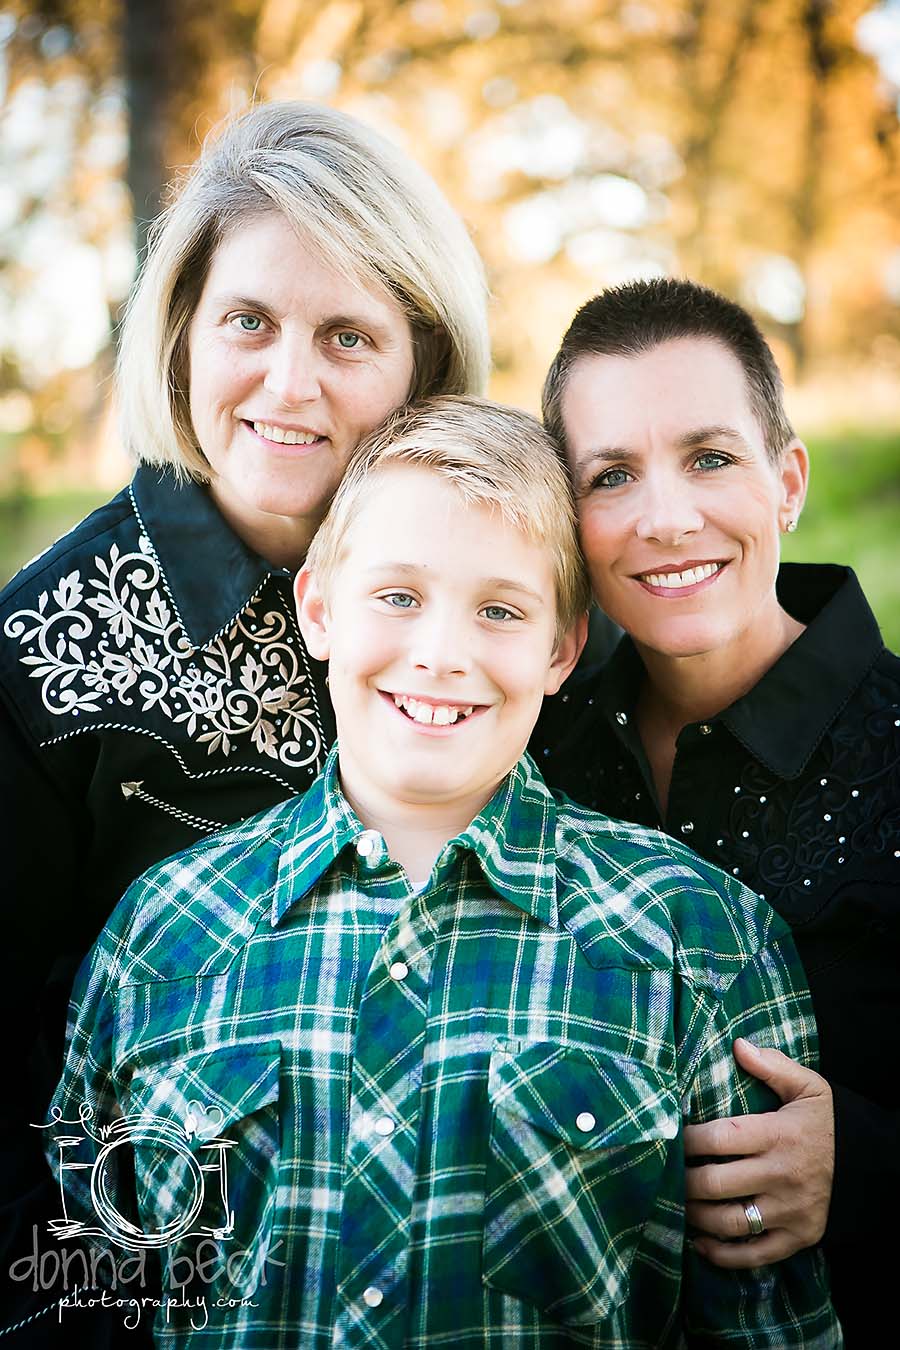 The P Family, Roseville Family Photographer, Donna Beck Photography, Mini Sessions, Sacramento Family Photographer